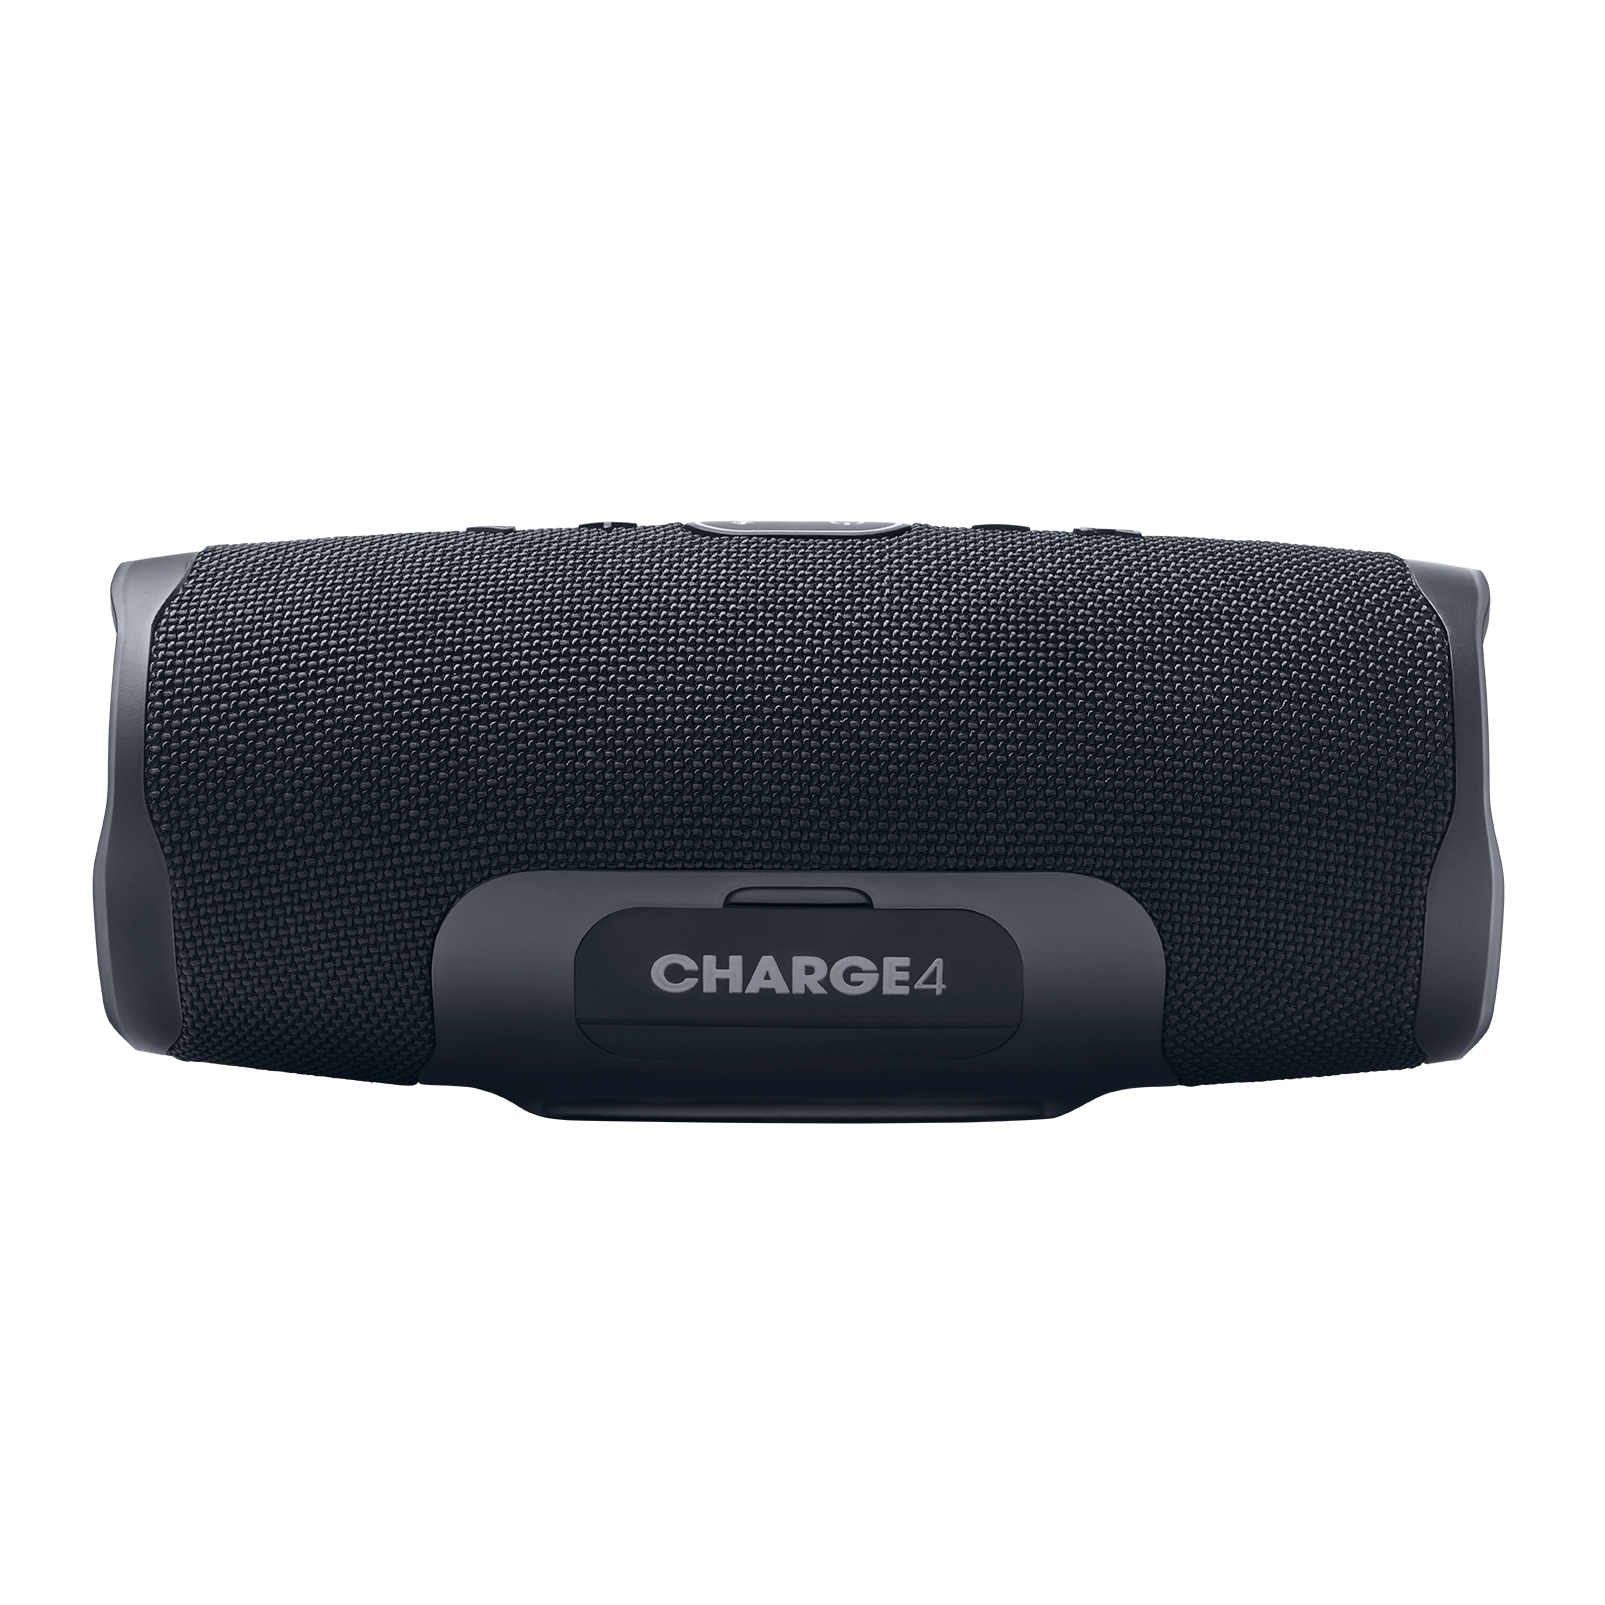 JBL Charge 4 - Black - Portable Bluetooth speaker - Back